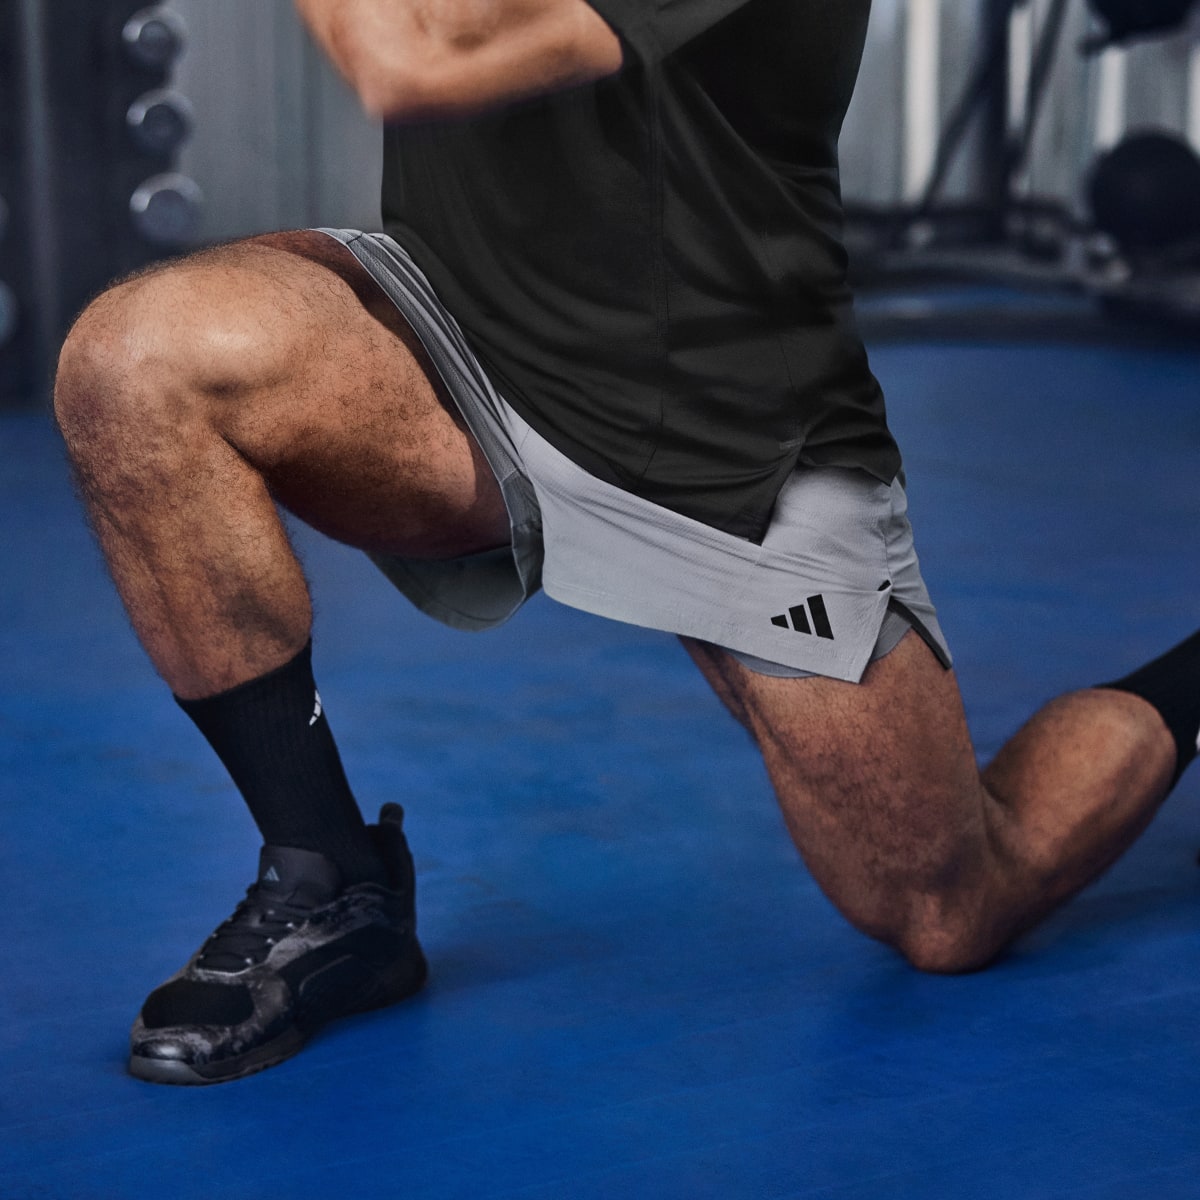 Adidas D4T Pro Series Adistrong Workout Shorts. 9